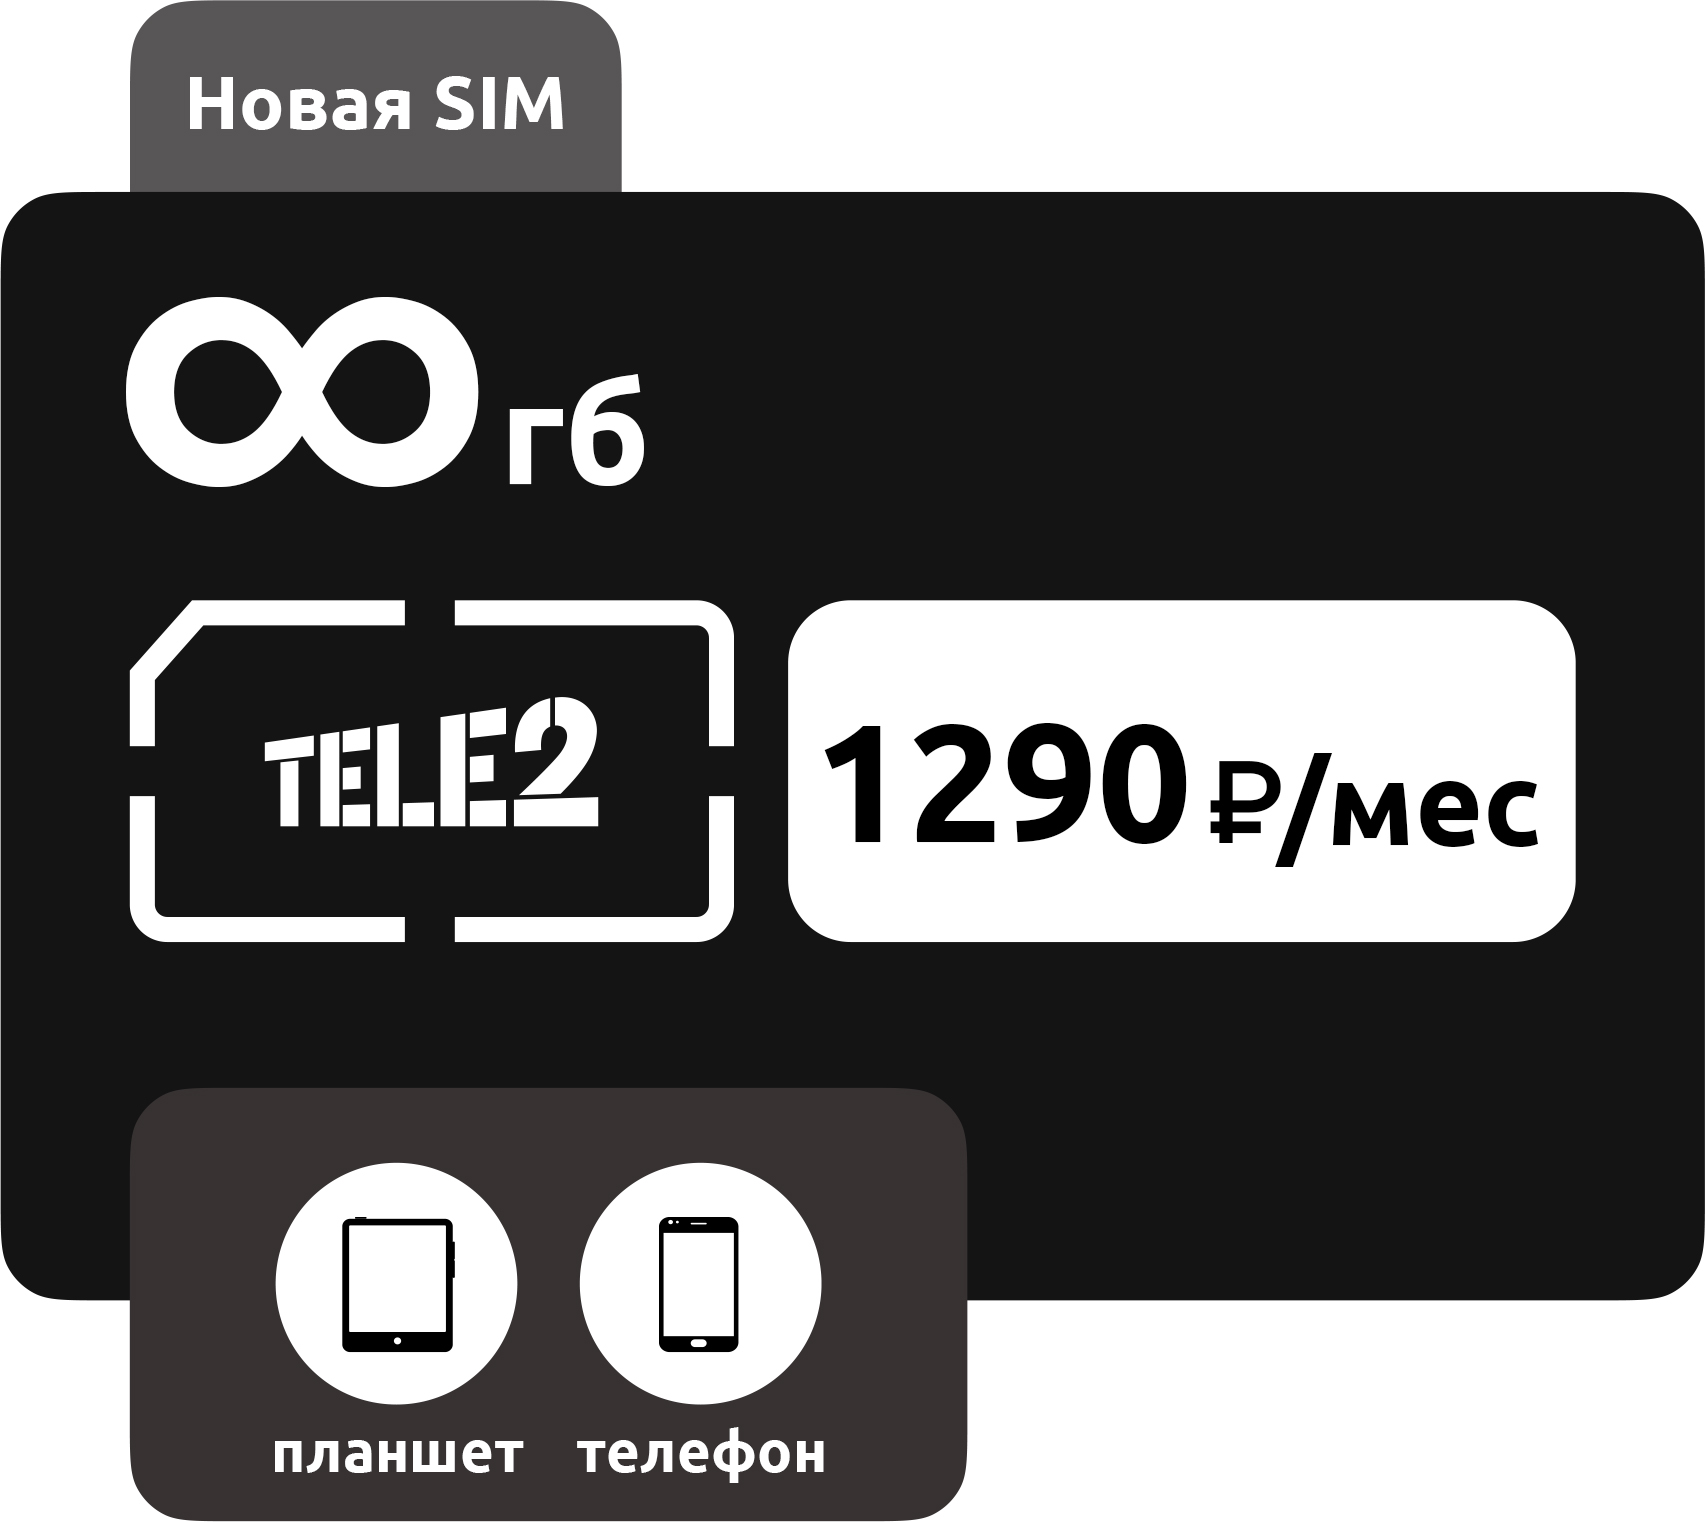 SIM-карта Теле2 1290 руб/мес безлимит фото